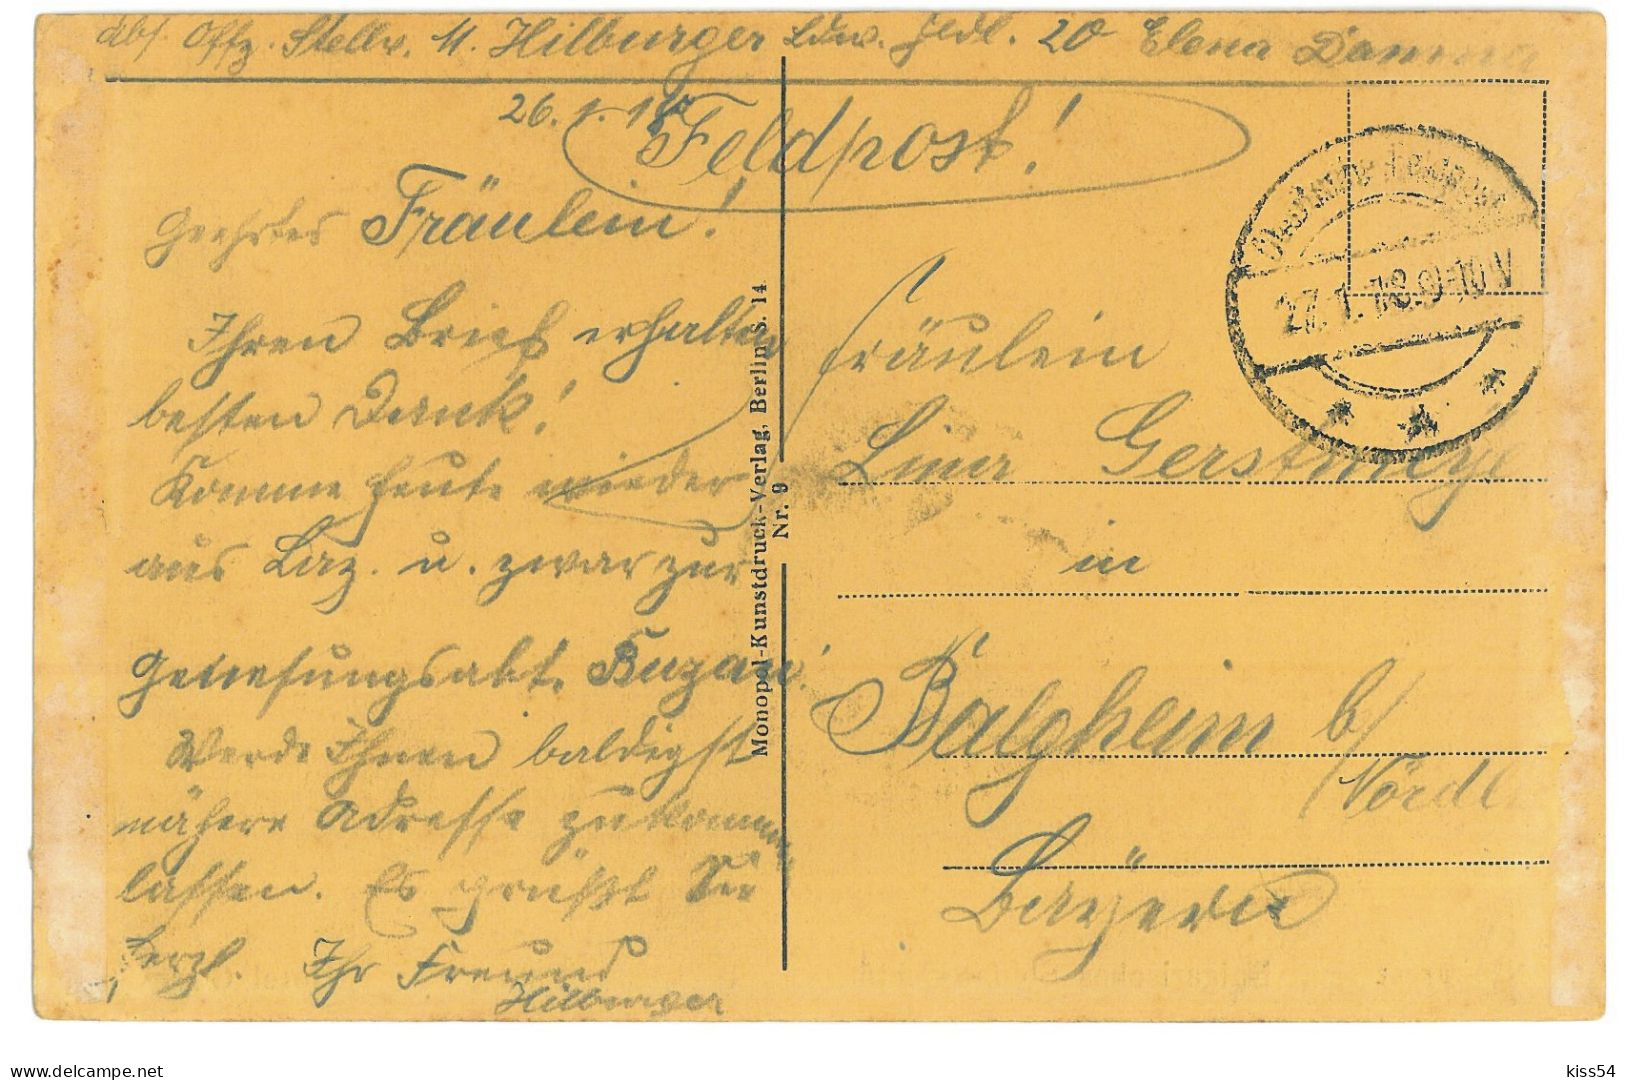 RO 91 - 21222 BUCURESTI, Hotel Capsa, Romania - Old Postcard, CENSOR - Used - 1918 - Rumania